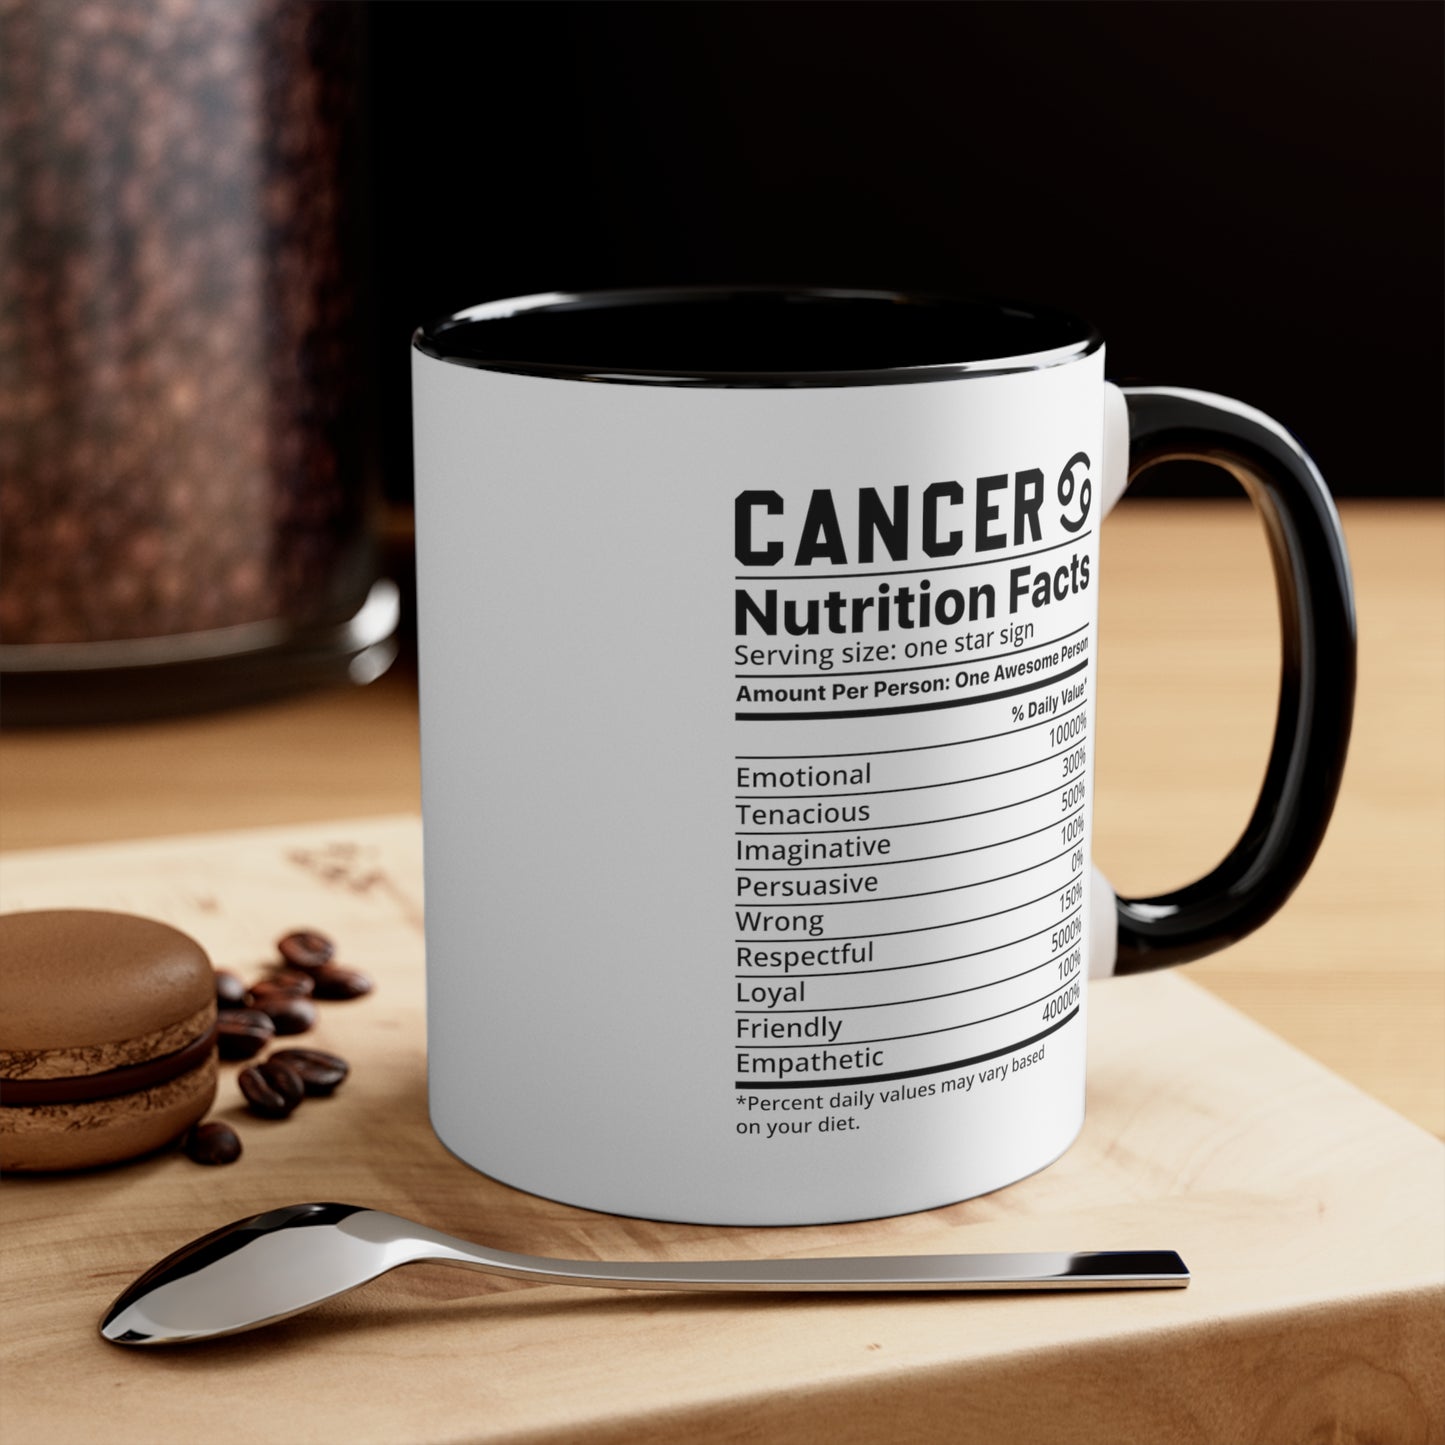 Cancer Star Sign Nutrition Facts White Black Accent Ceramic Mugs 11oz,  Zodiac, Astrology, Celestial, coffee mug, tea cup, joke, funny, humorous, fun